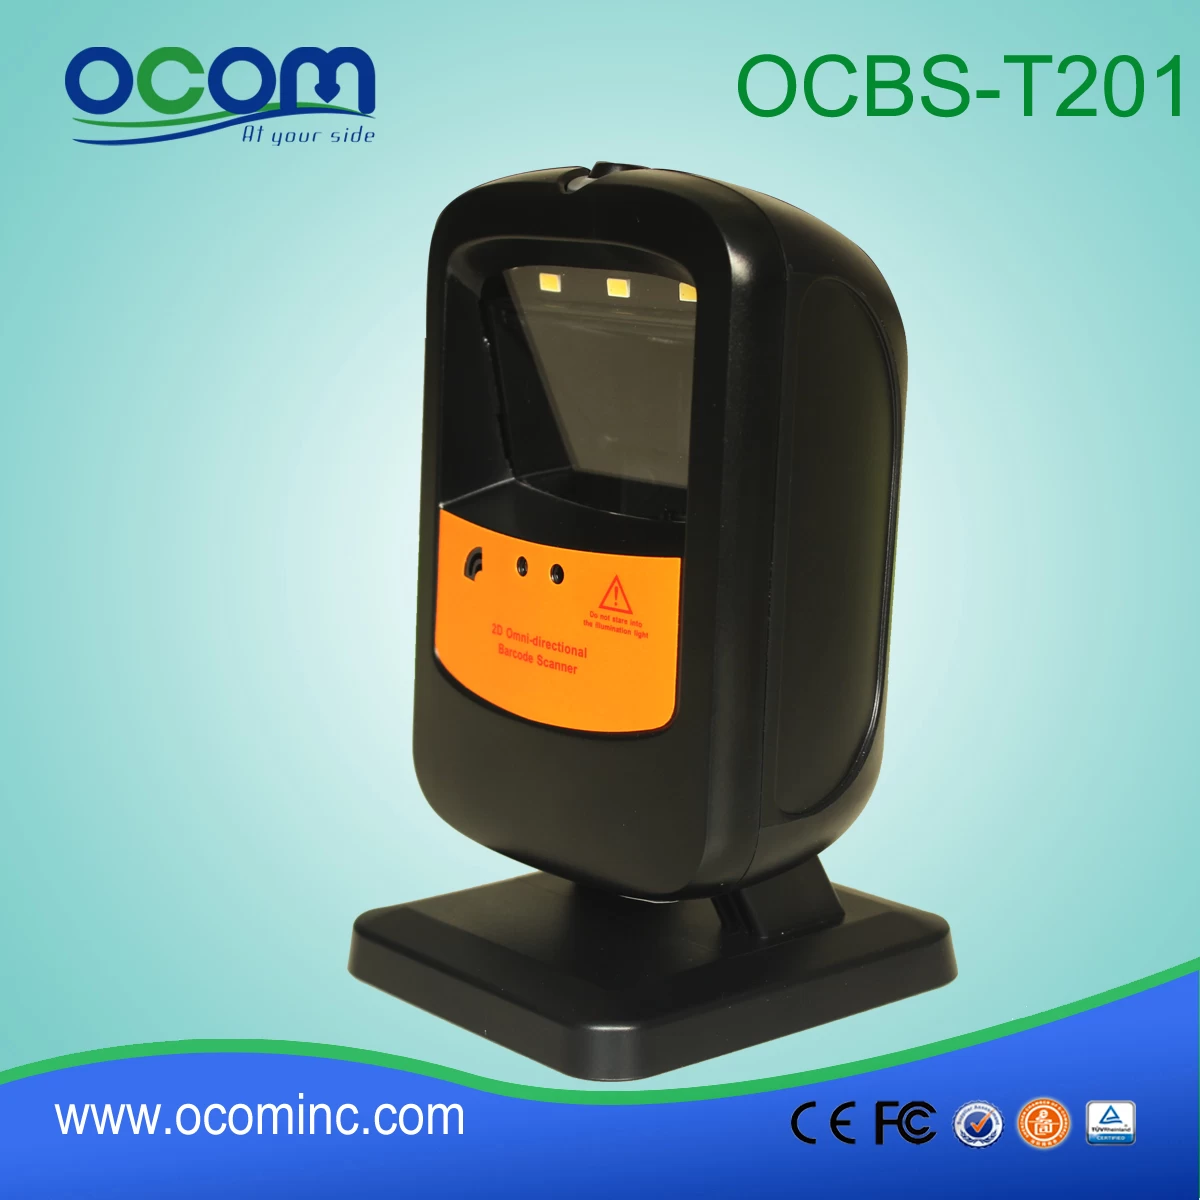 OCBS-T201:supermarket barcode scanner module, barcode scanner mini usb